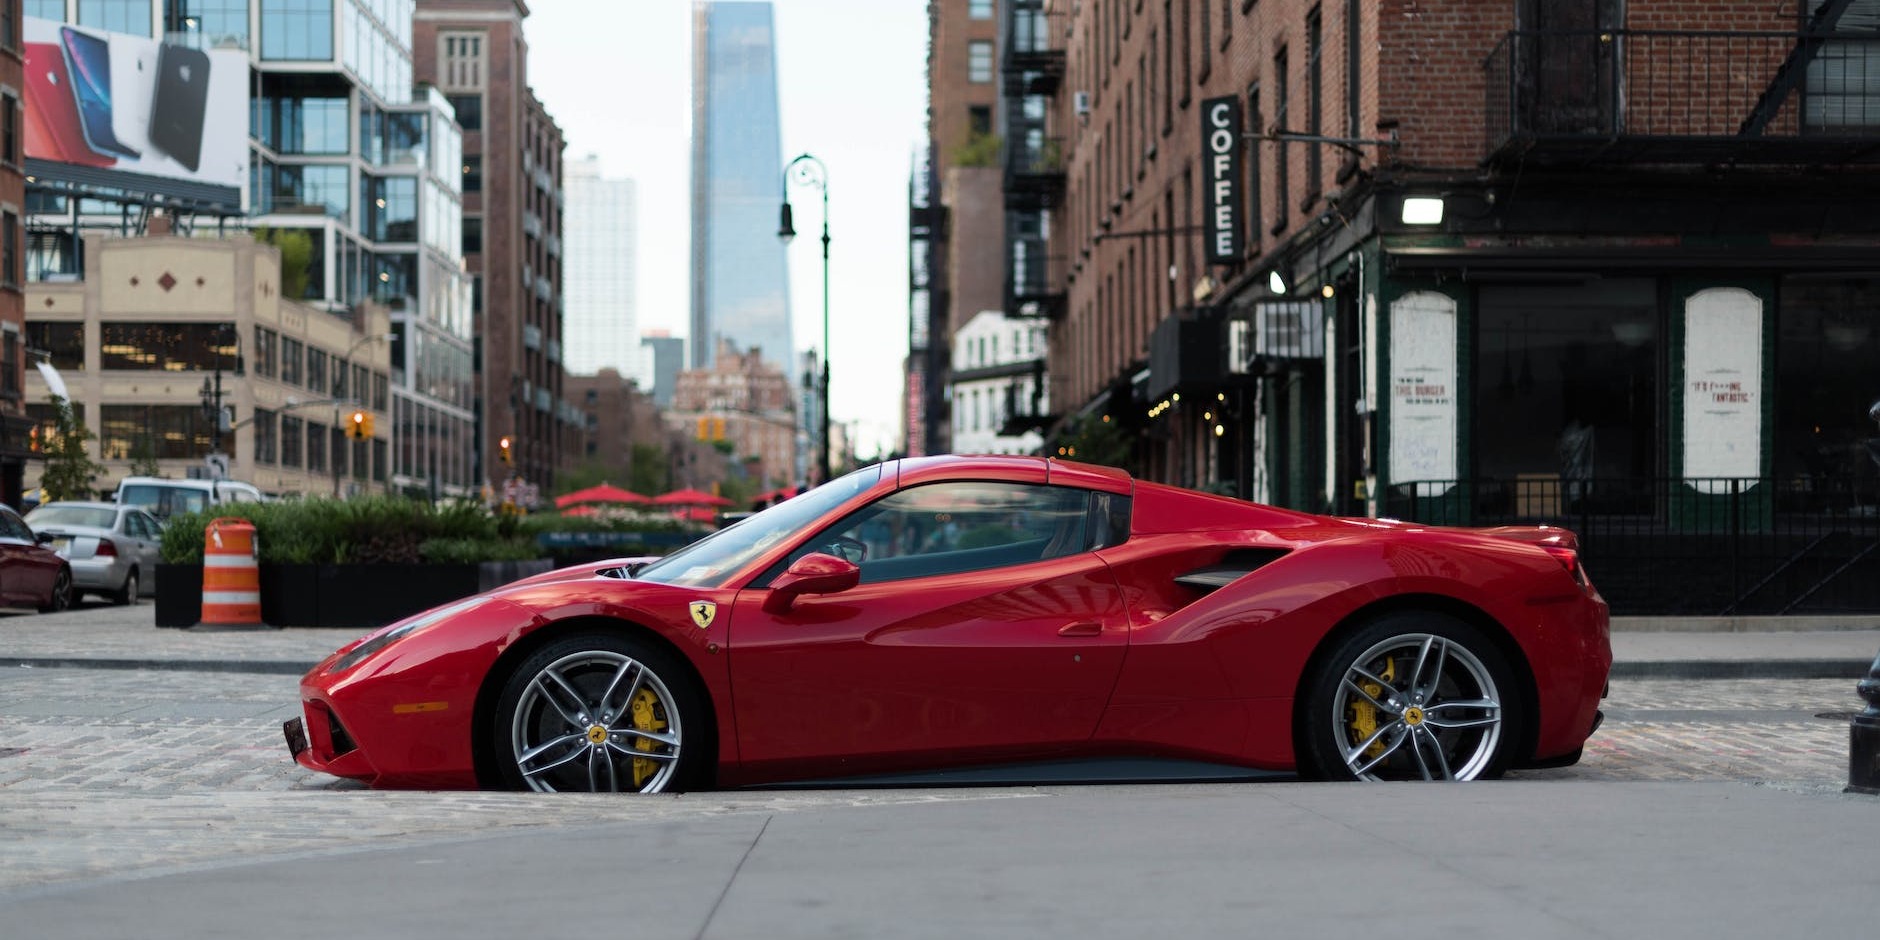 What Makes Ferrari the Epitome of Italian Craftsmanship?